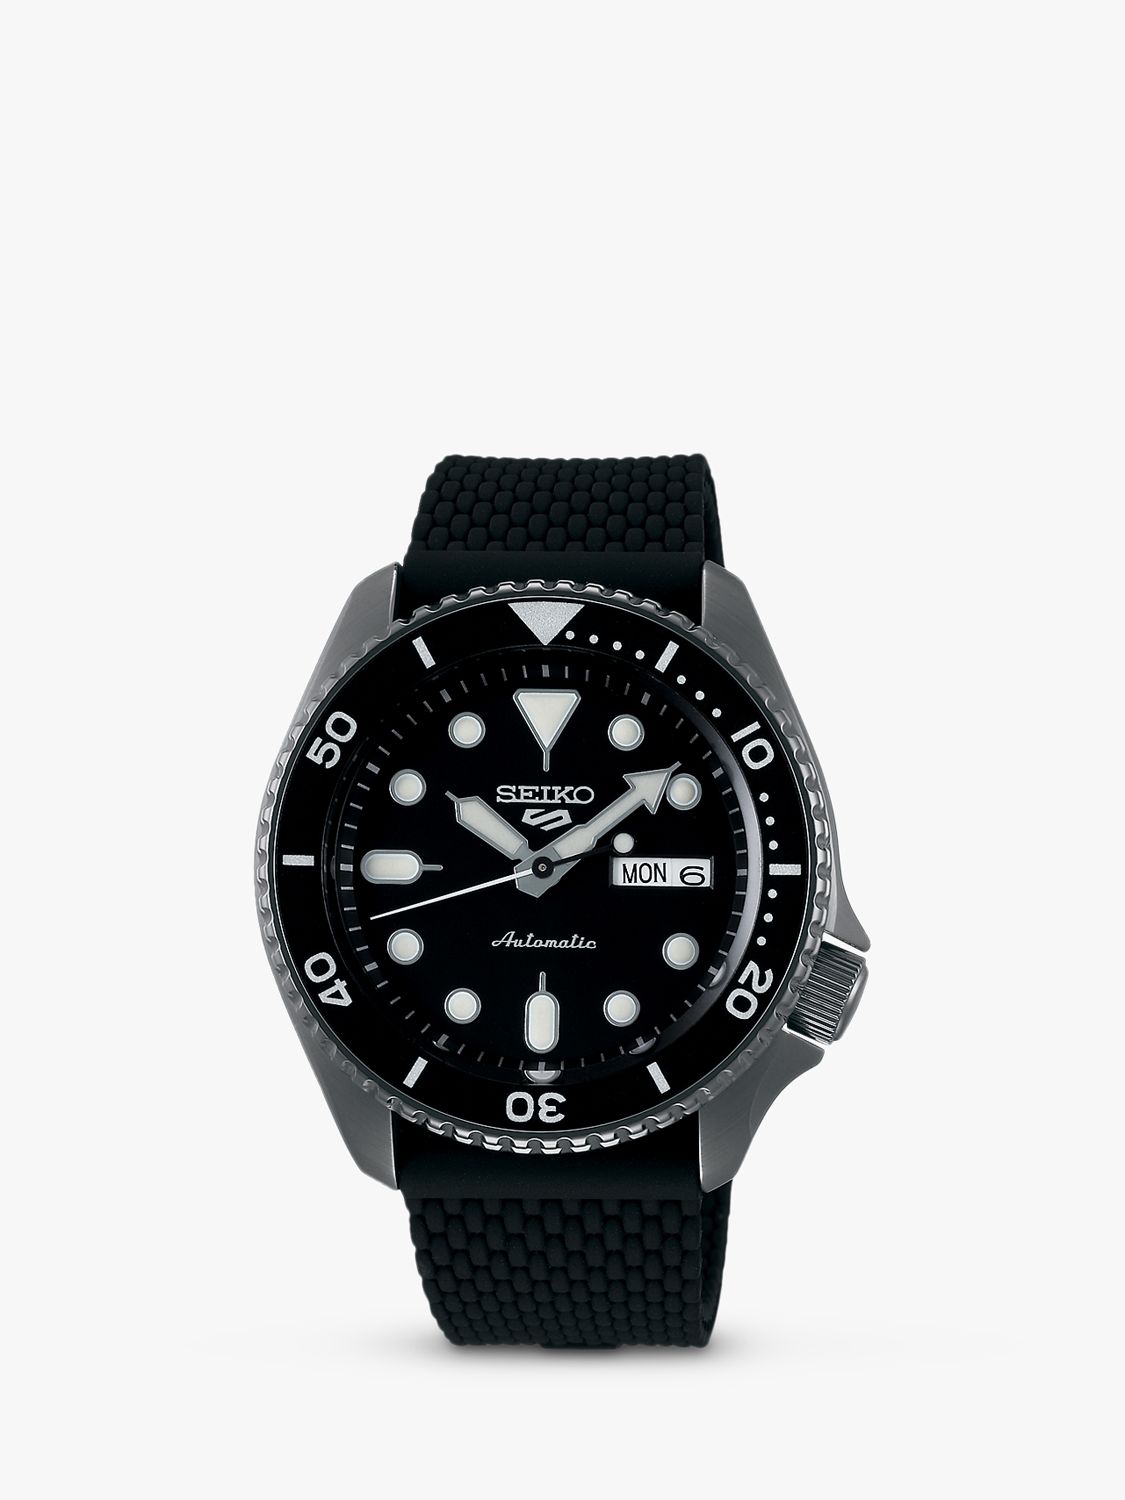 Seiko Men's 5 Sports Automatic Day Date Rubber Strap Watch, Black SRPD65K2